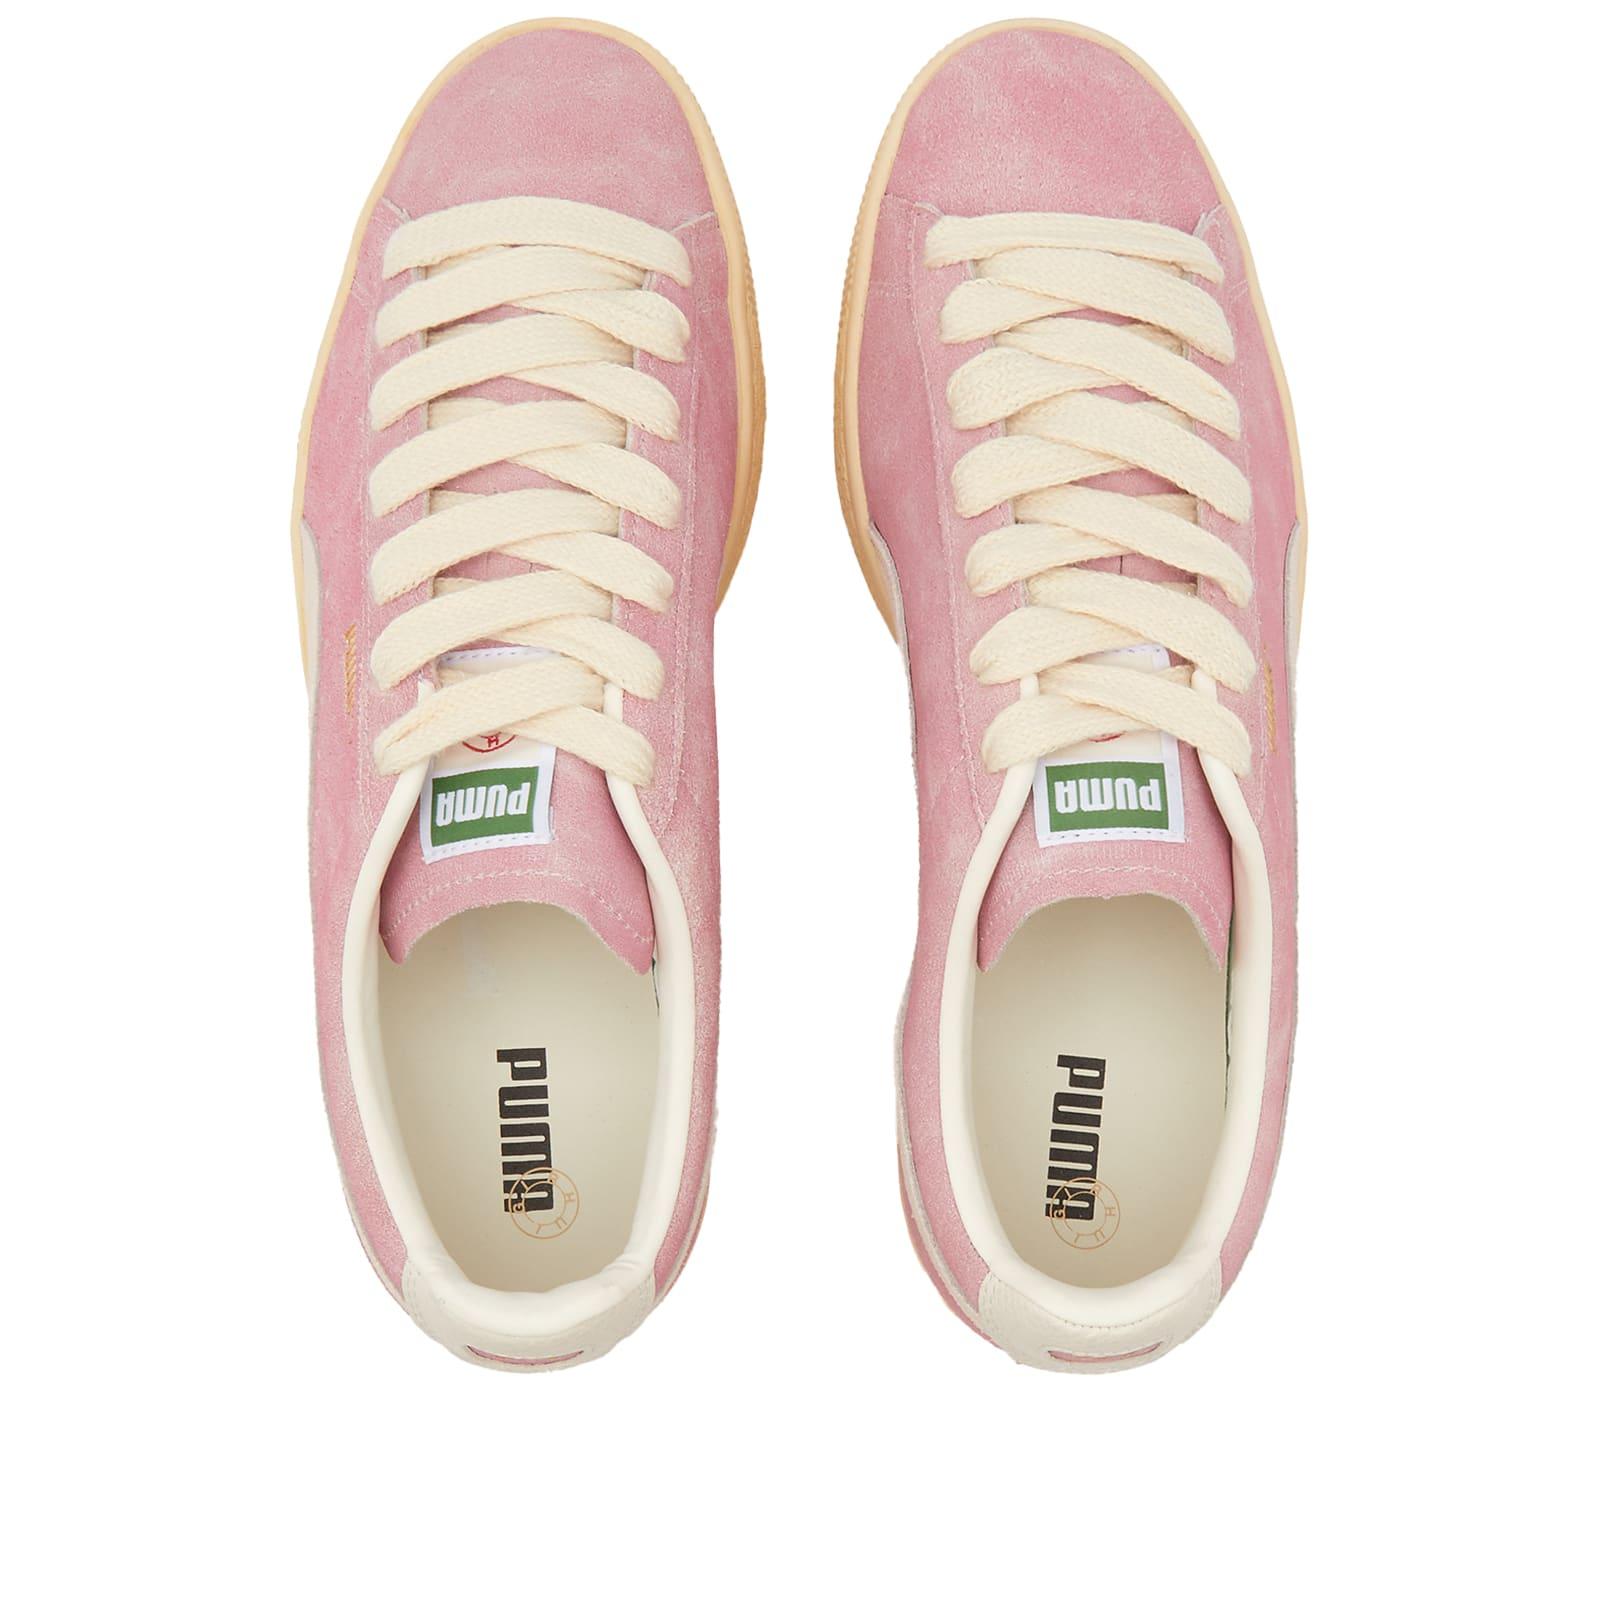 PUMA Rhuigi Suede Bboy Sneakers Pink for |